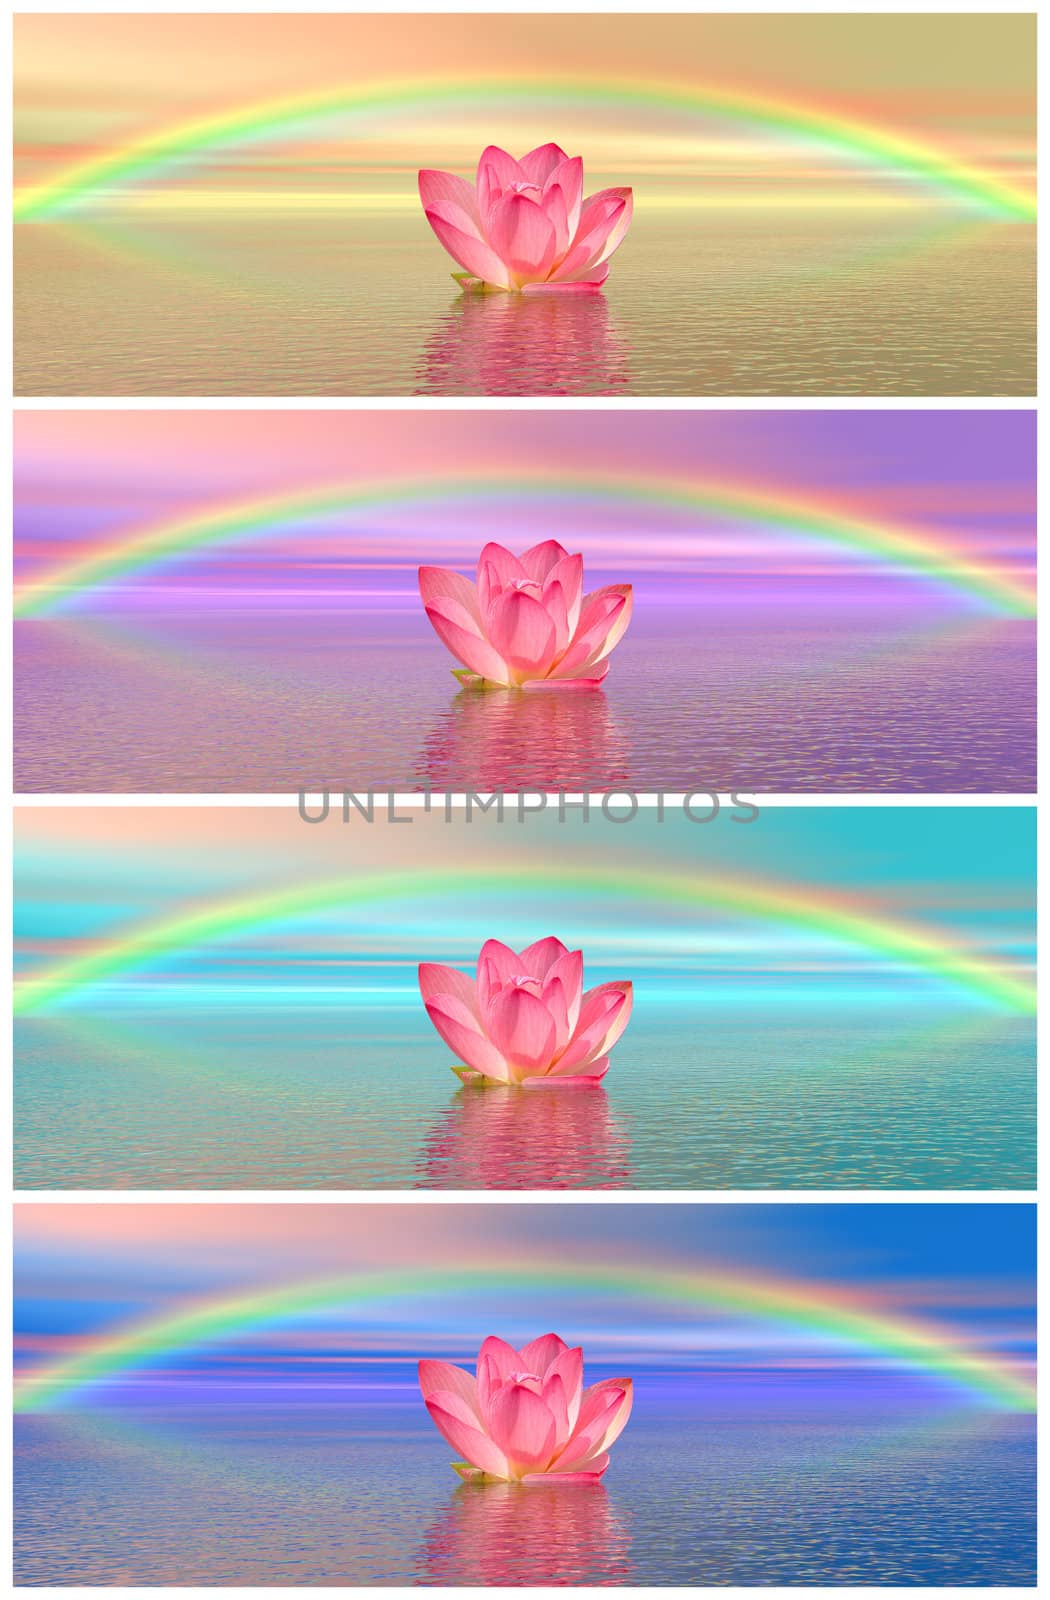 Lily flowers under rainbow by Elenaphotos21